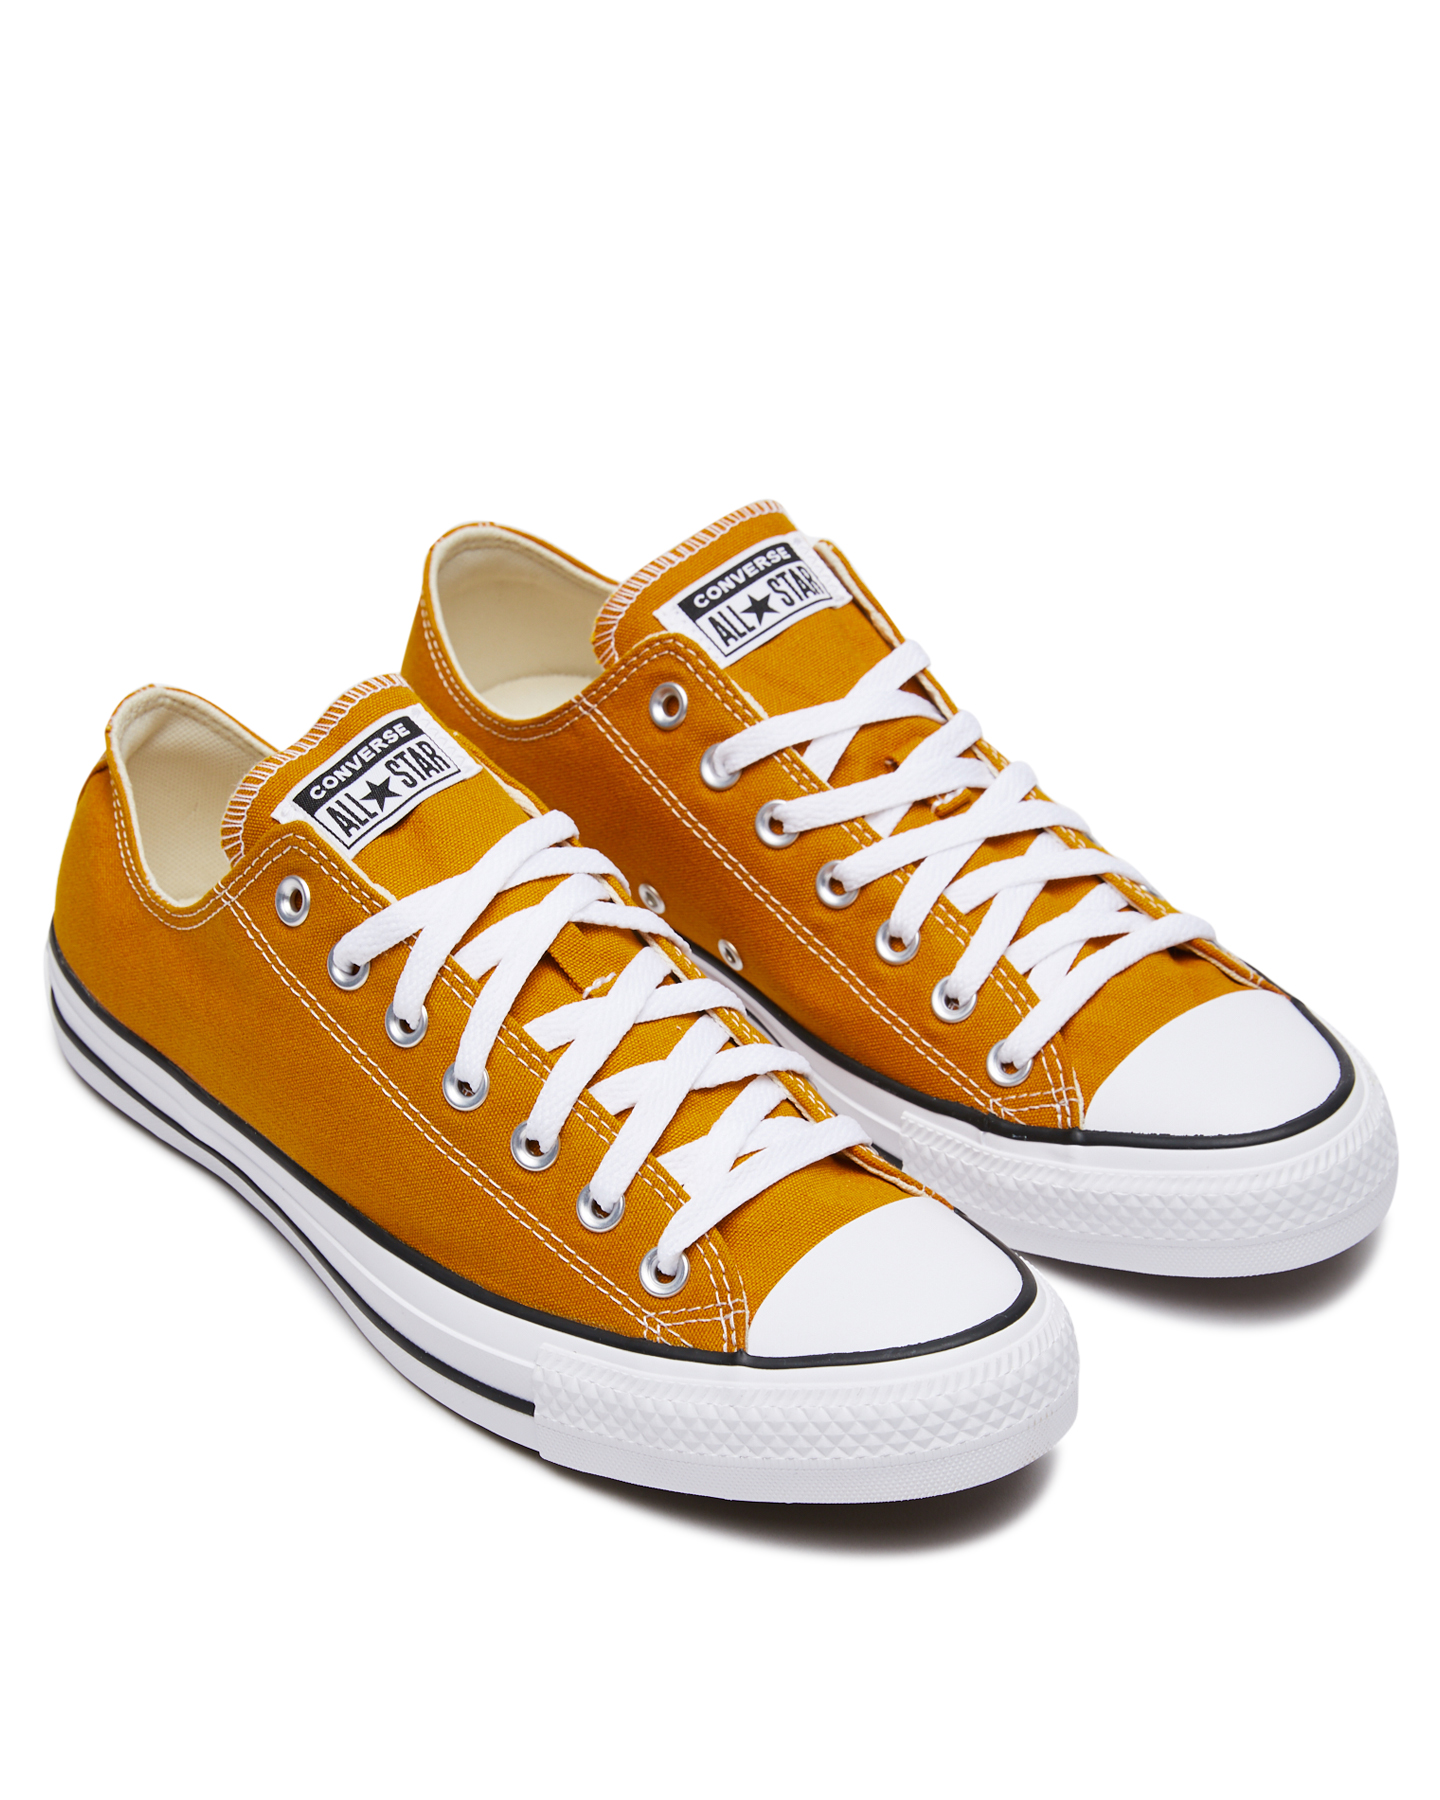 Converse Mens Chuck Taylor All Star Lo Shoe - Saffron Yellow | SurfStitch